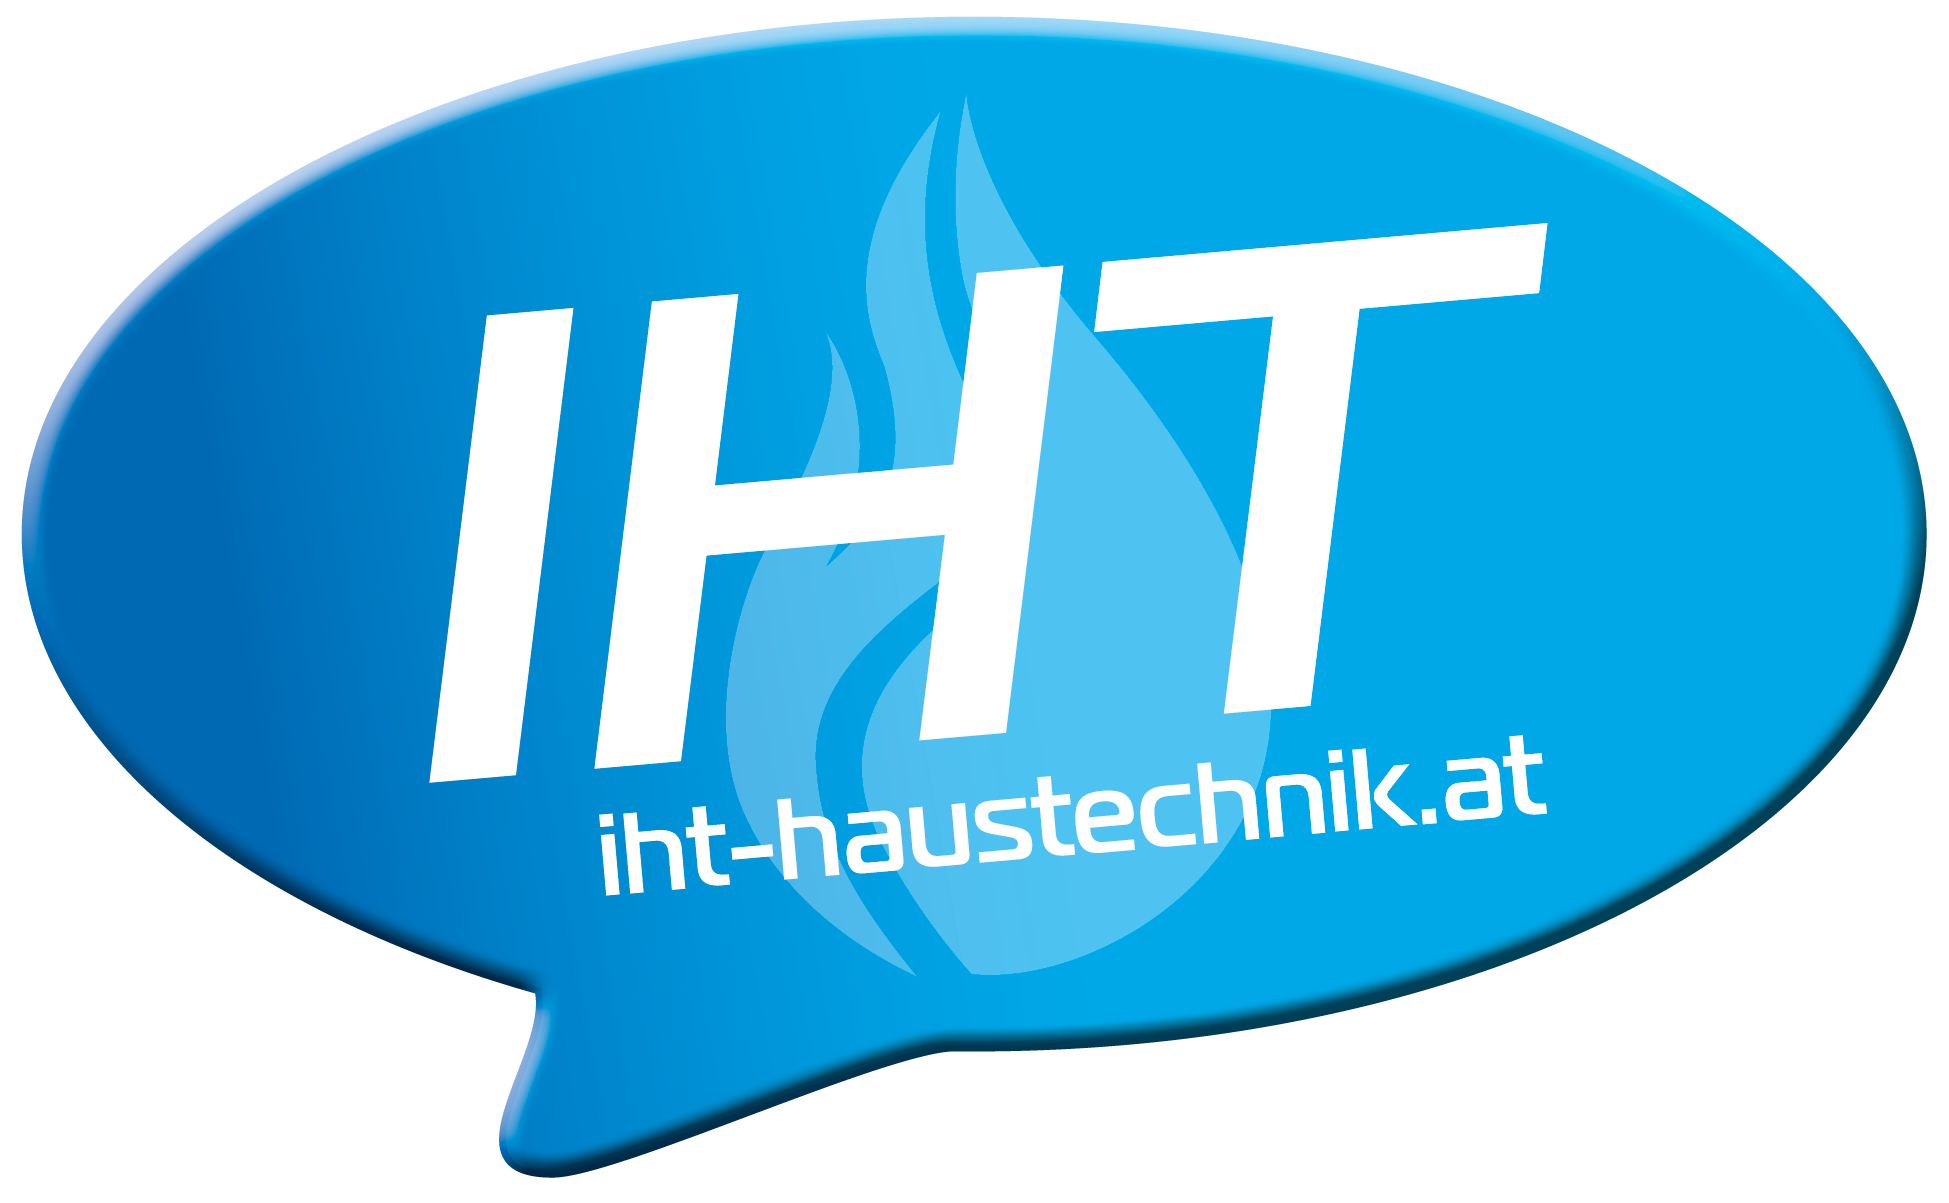 IHT-Haustechnik